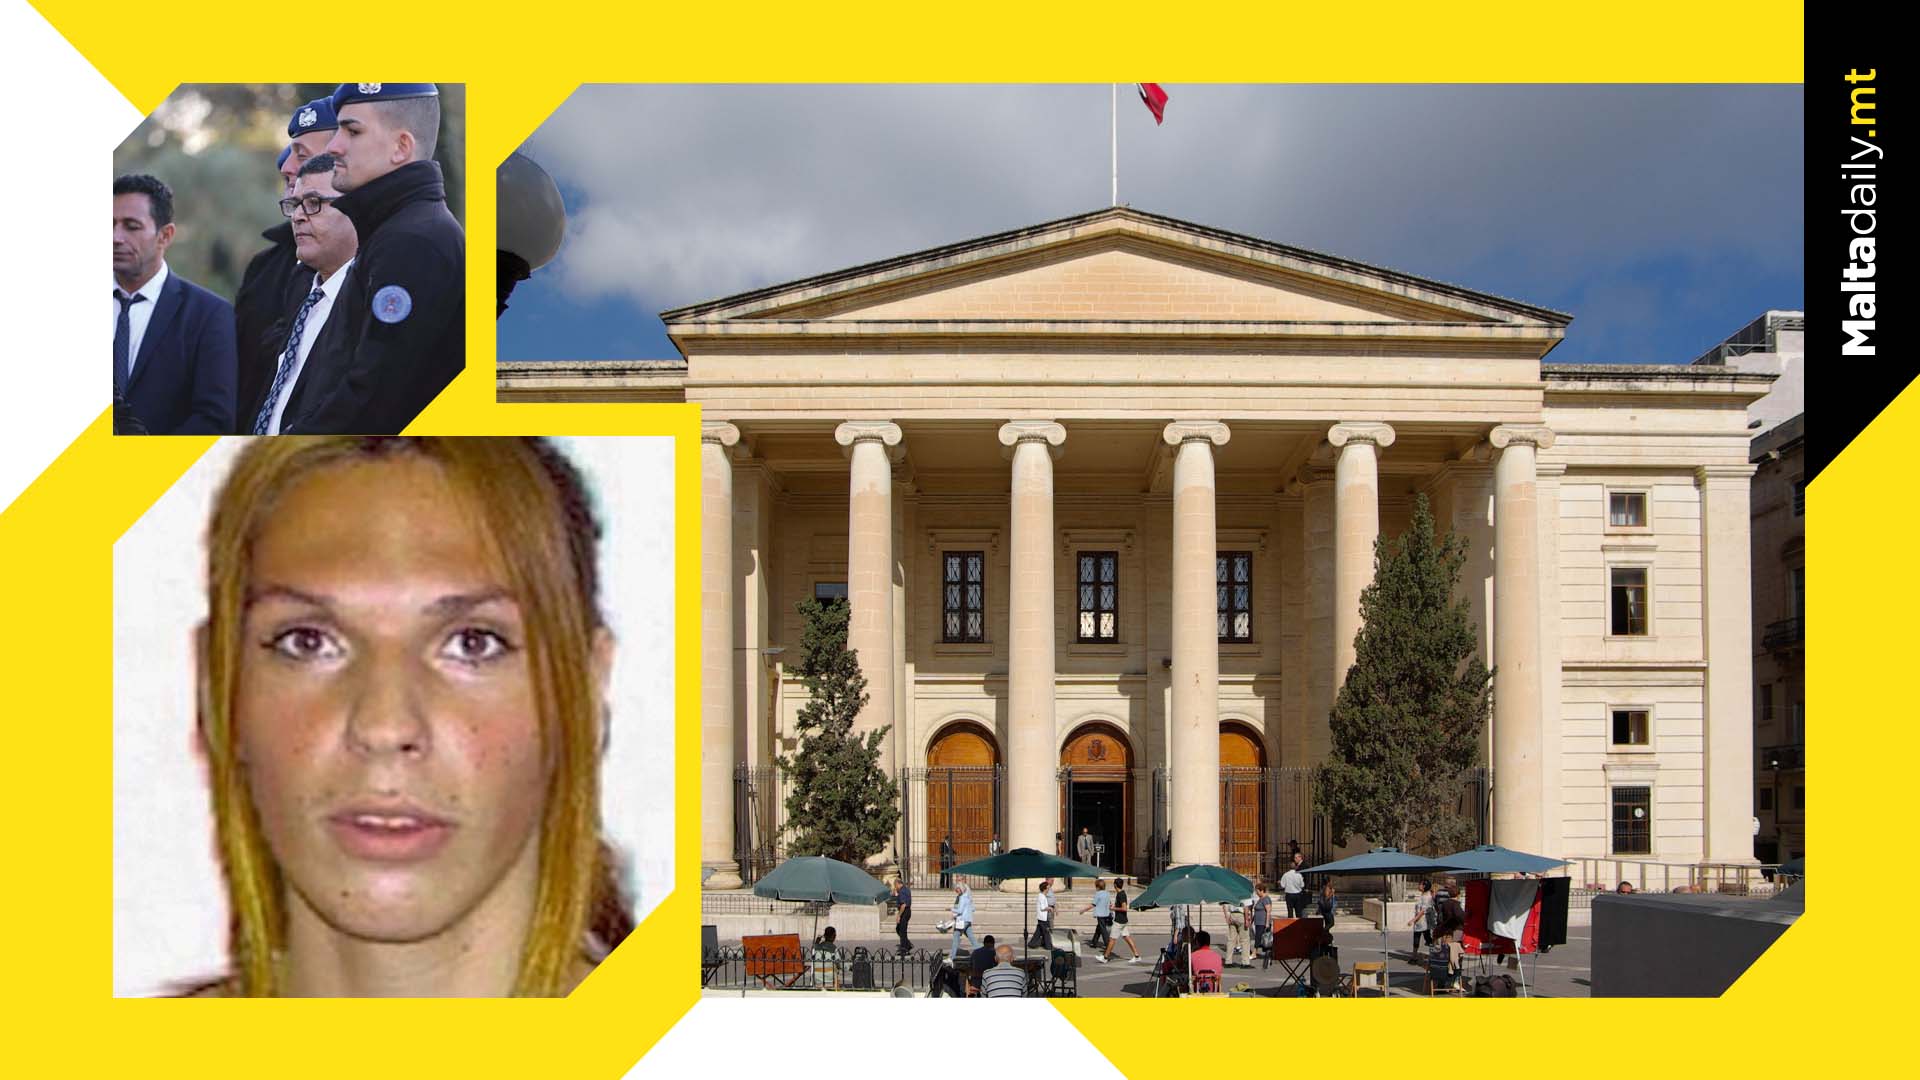 Justice delayed is justice denied says Malta Observatory Femicide